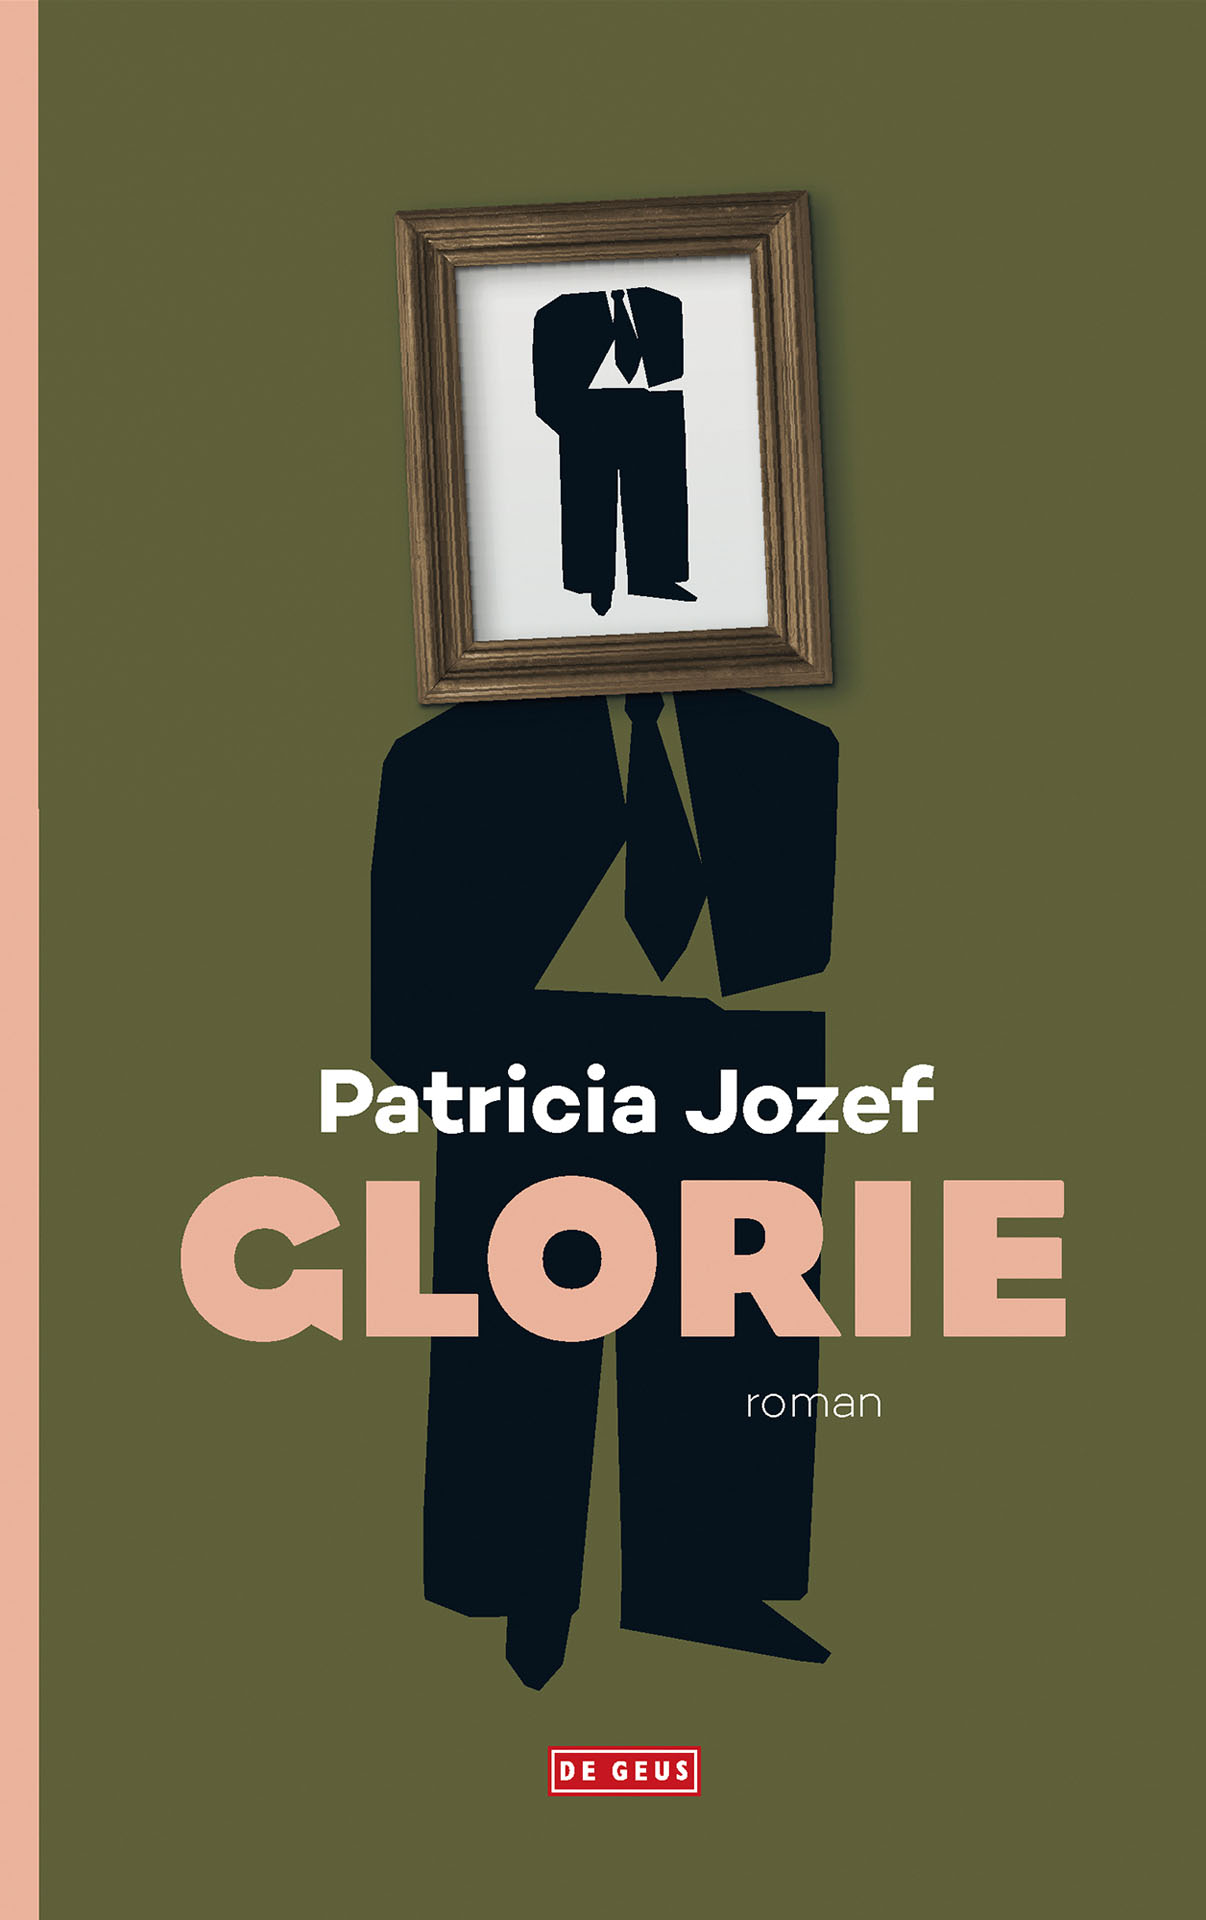 Patricia Jozef - Glorie